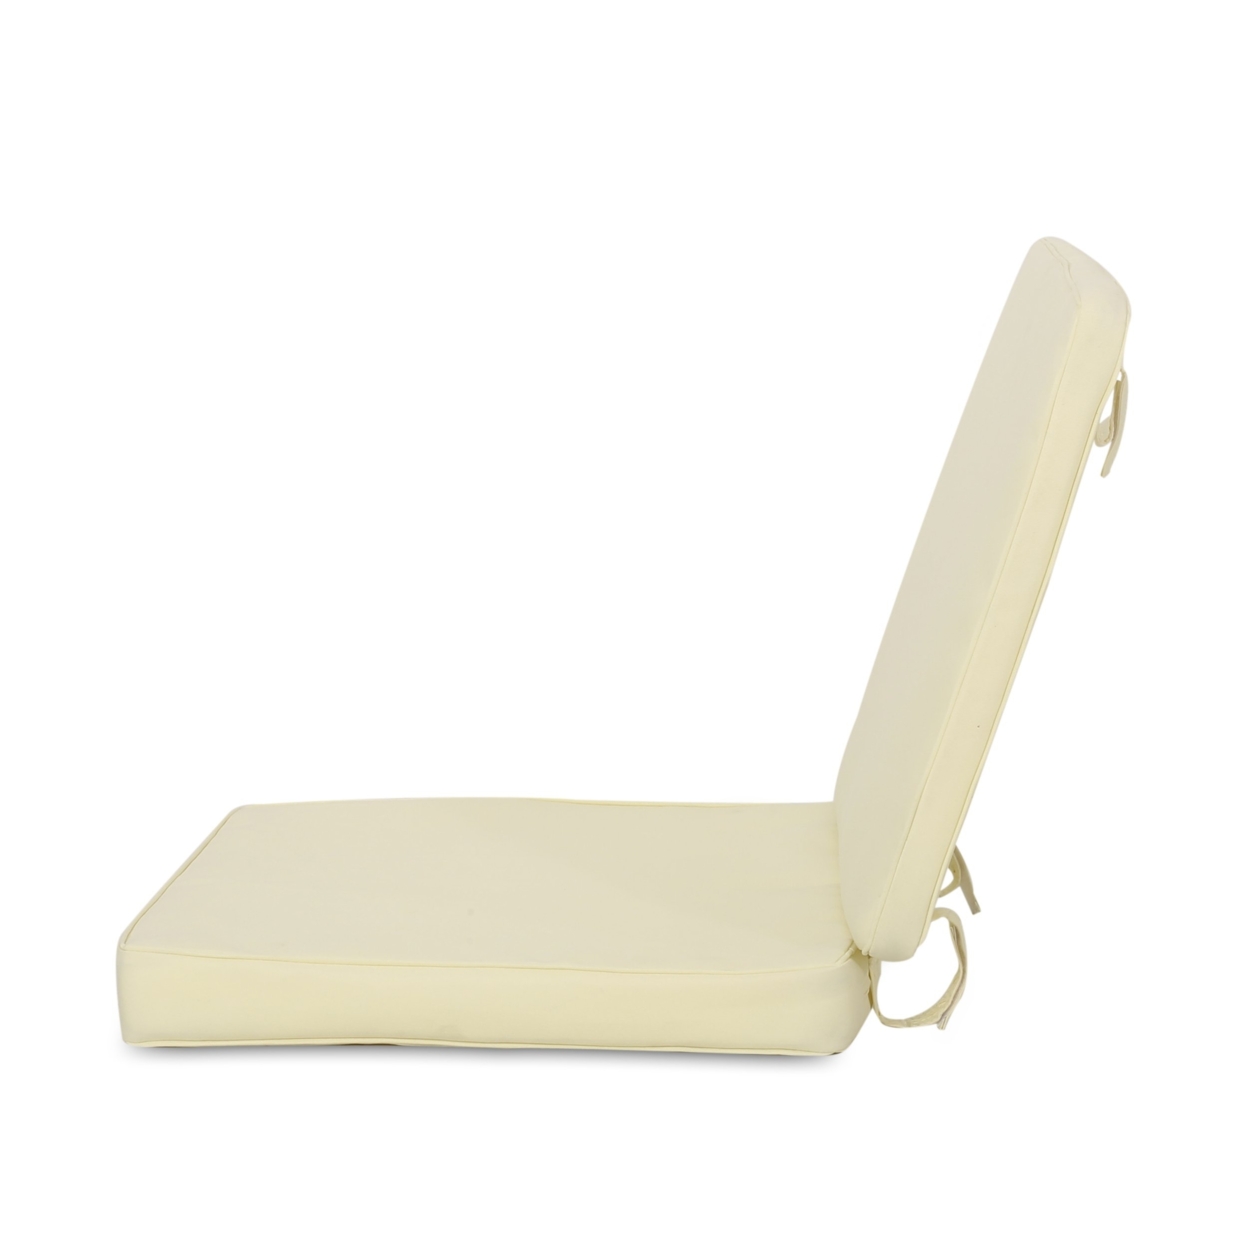 Eydan Outdoor Water Resistant Fabric Club Chair Cushions - Cream